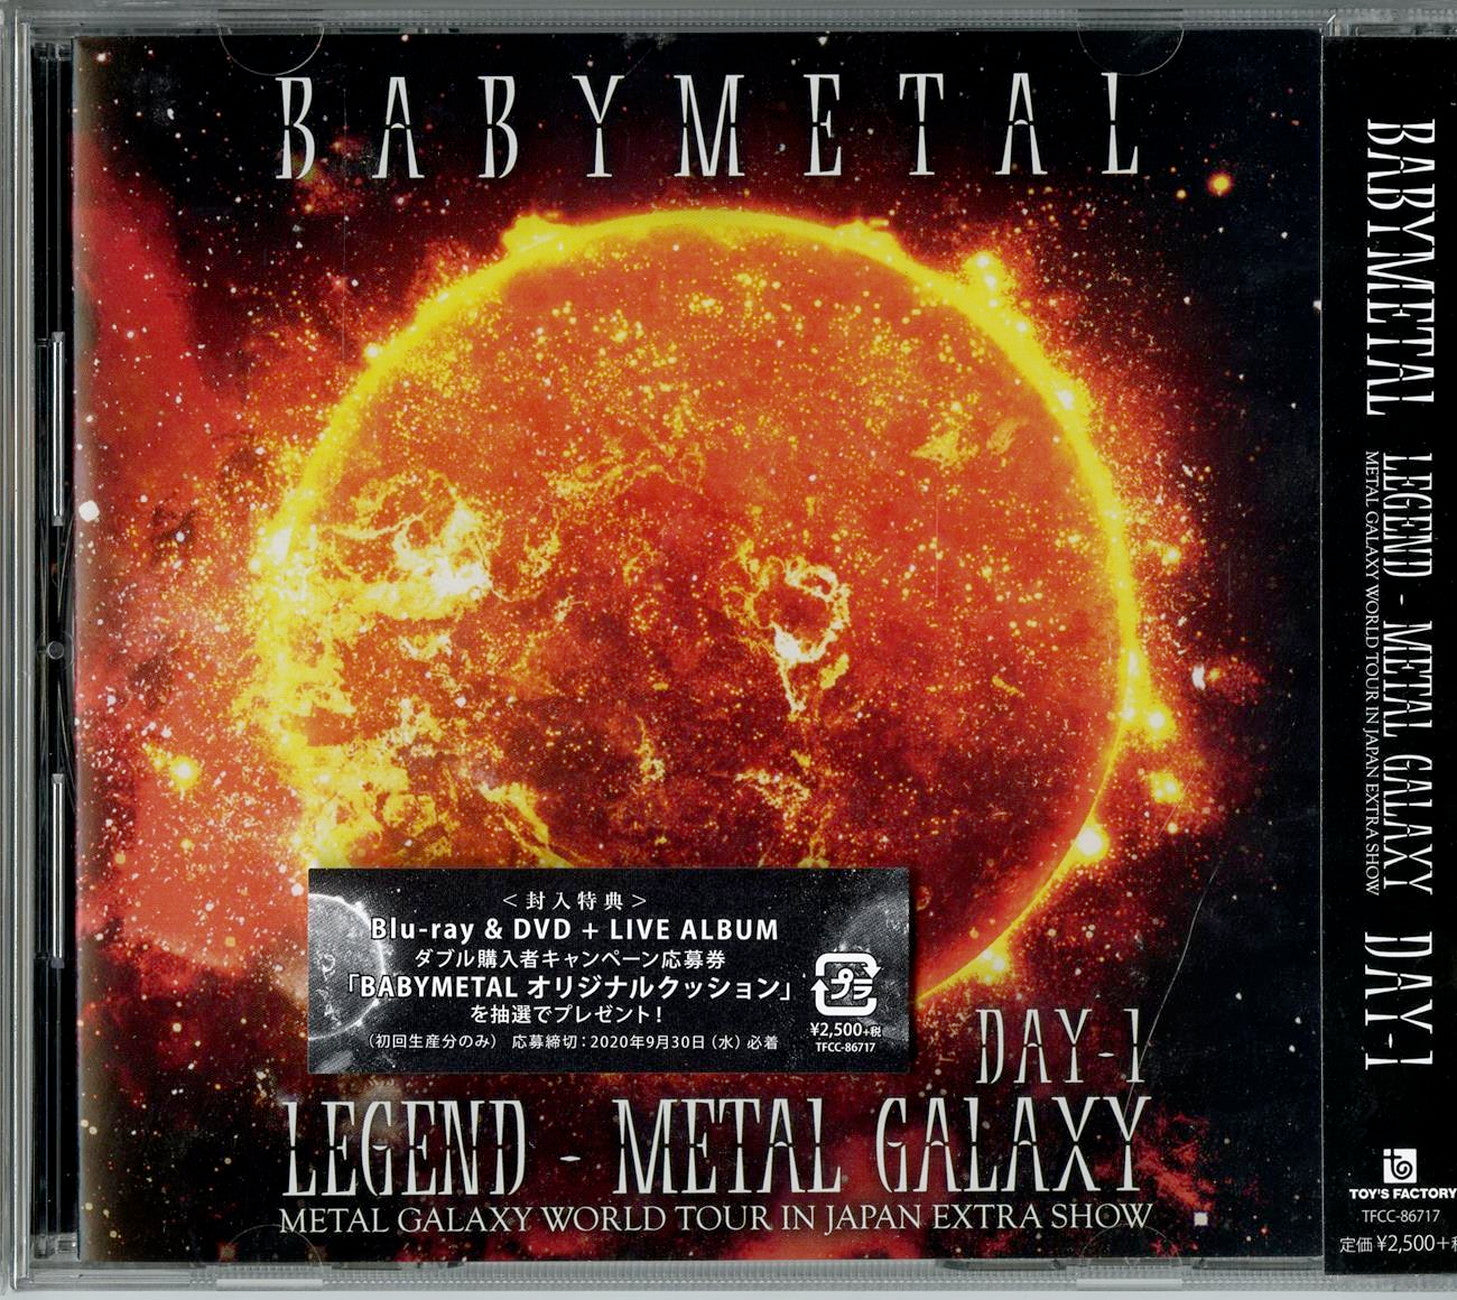 Babymetal - Live Album: Legend - Metal Galaxy [Day-1] (Metal